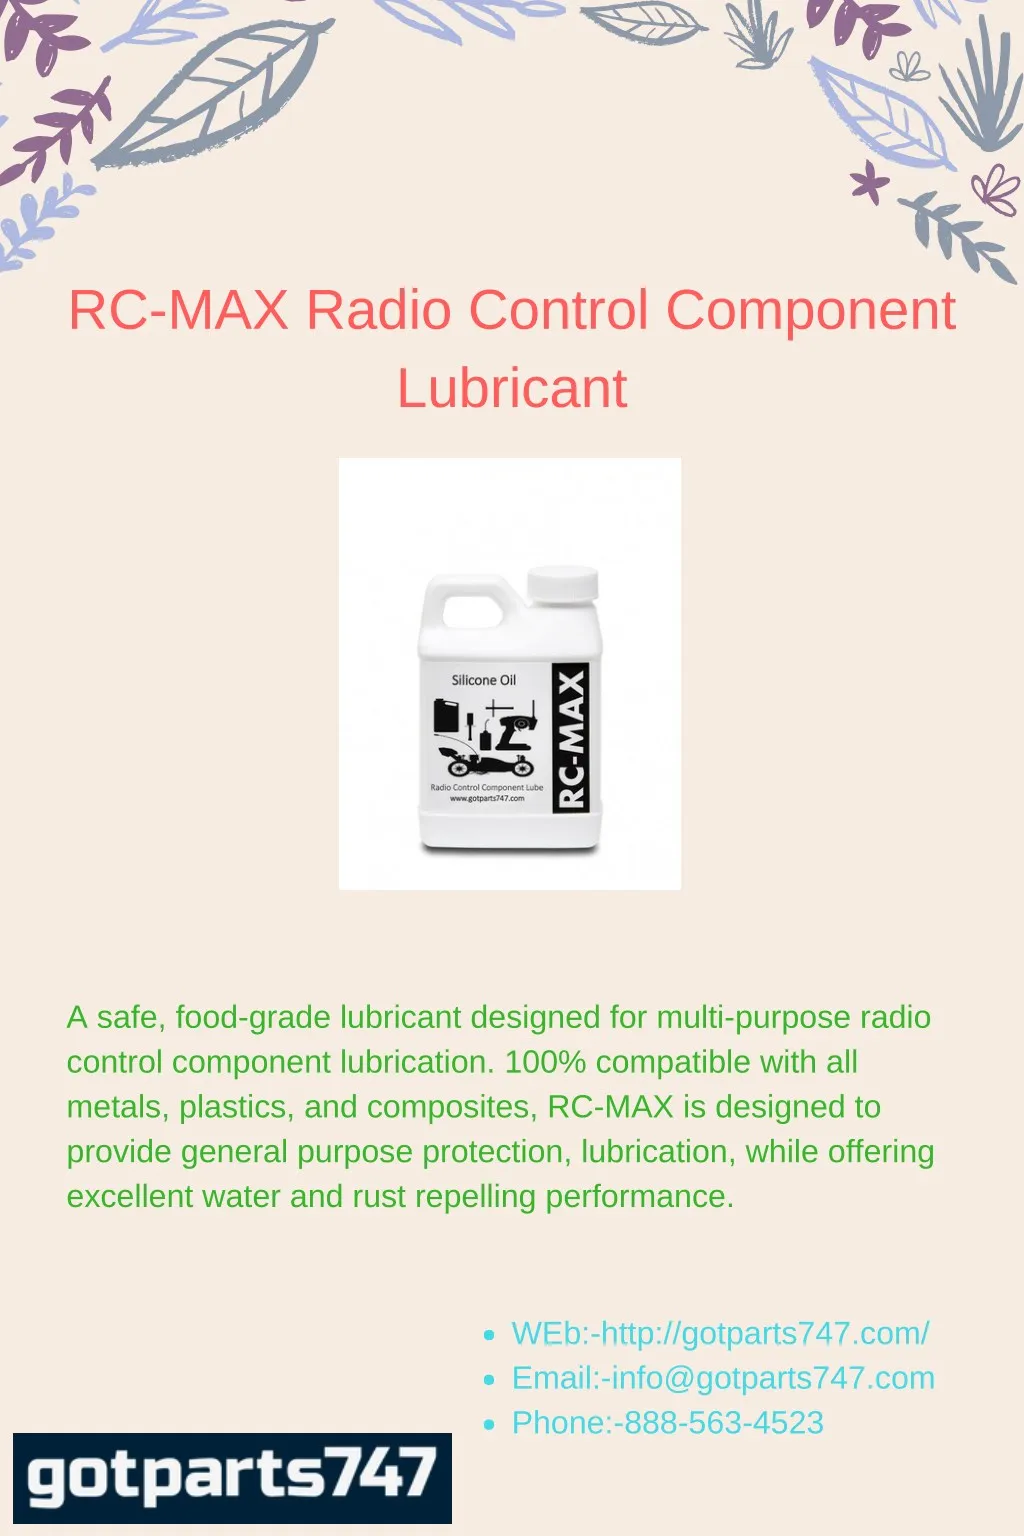 rc max radio control component lubricant n.